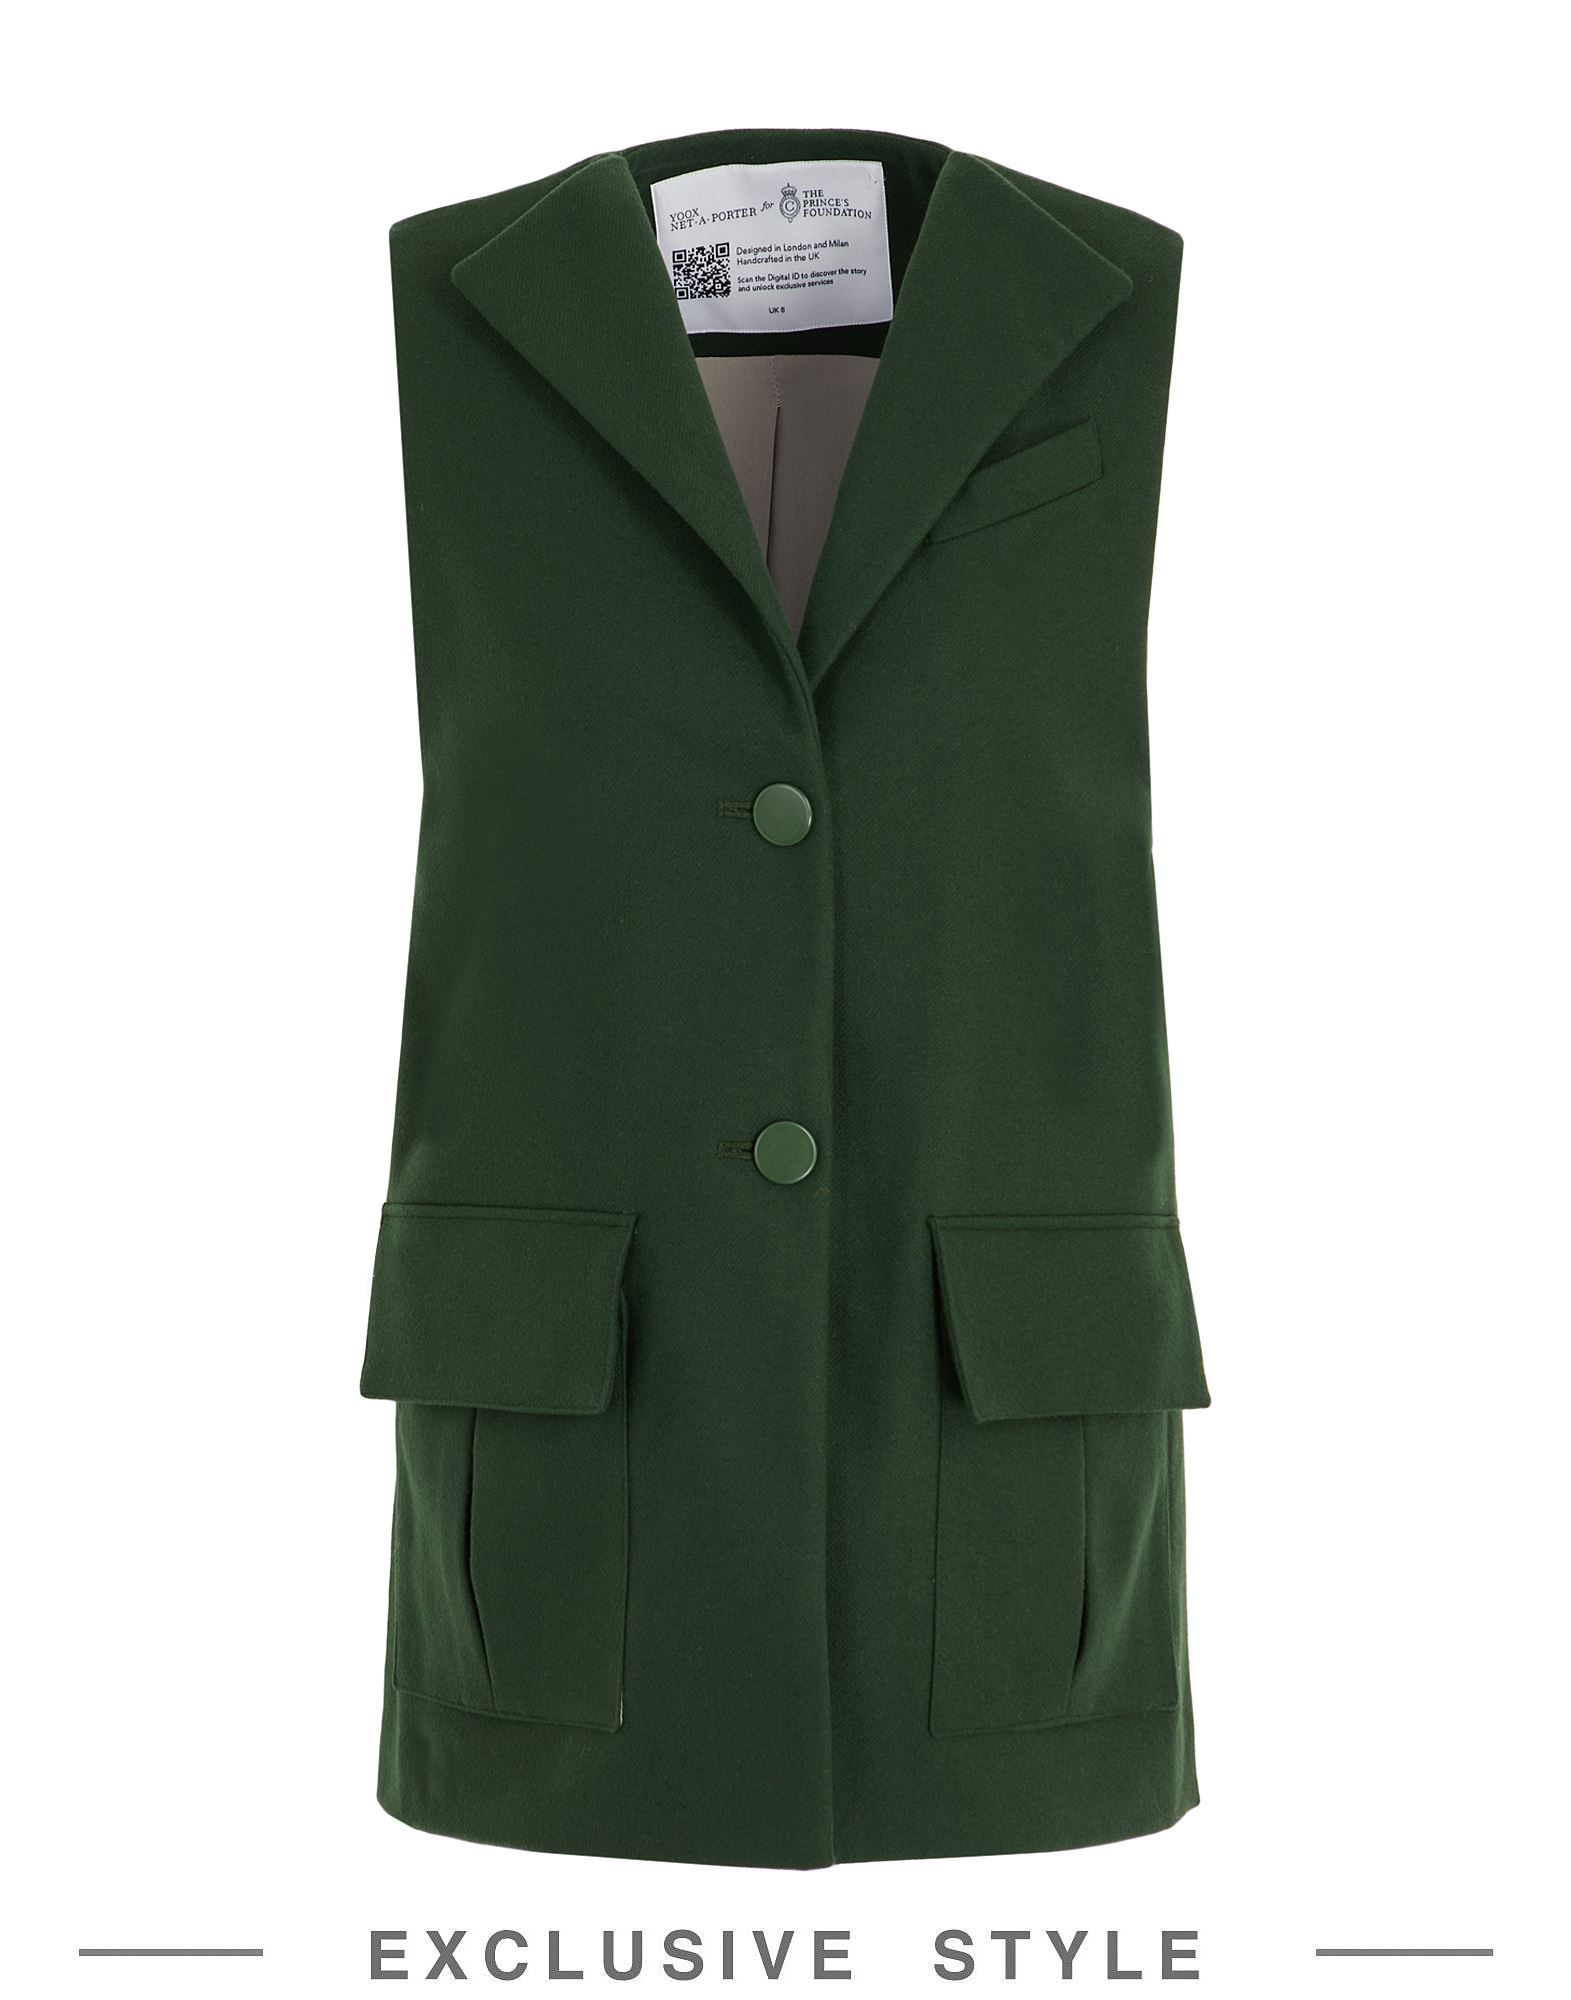 Yoox Net-a-porter For The Prince's Foundation Woman Blazer Dark Green Size 12 Virgin Wool